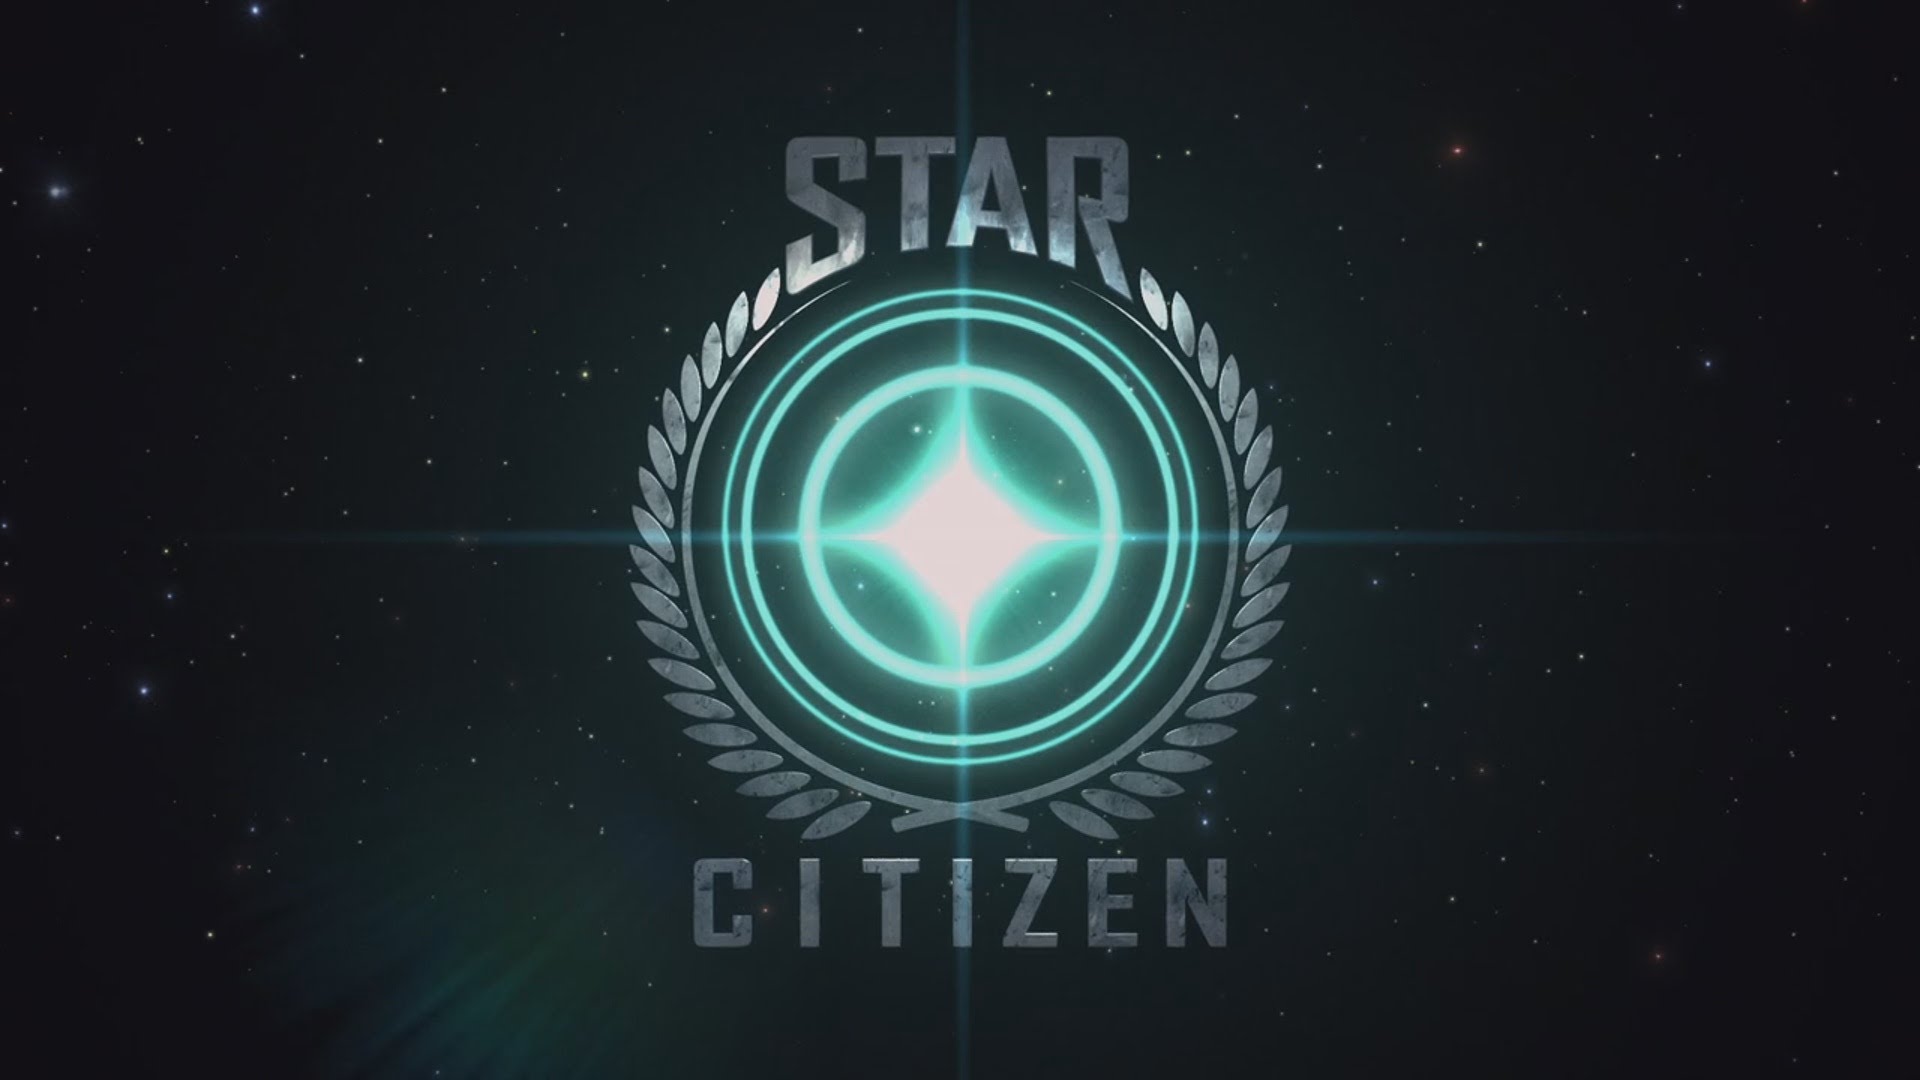 Star Citizen production schedule goes public—but still no release date